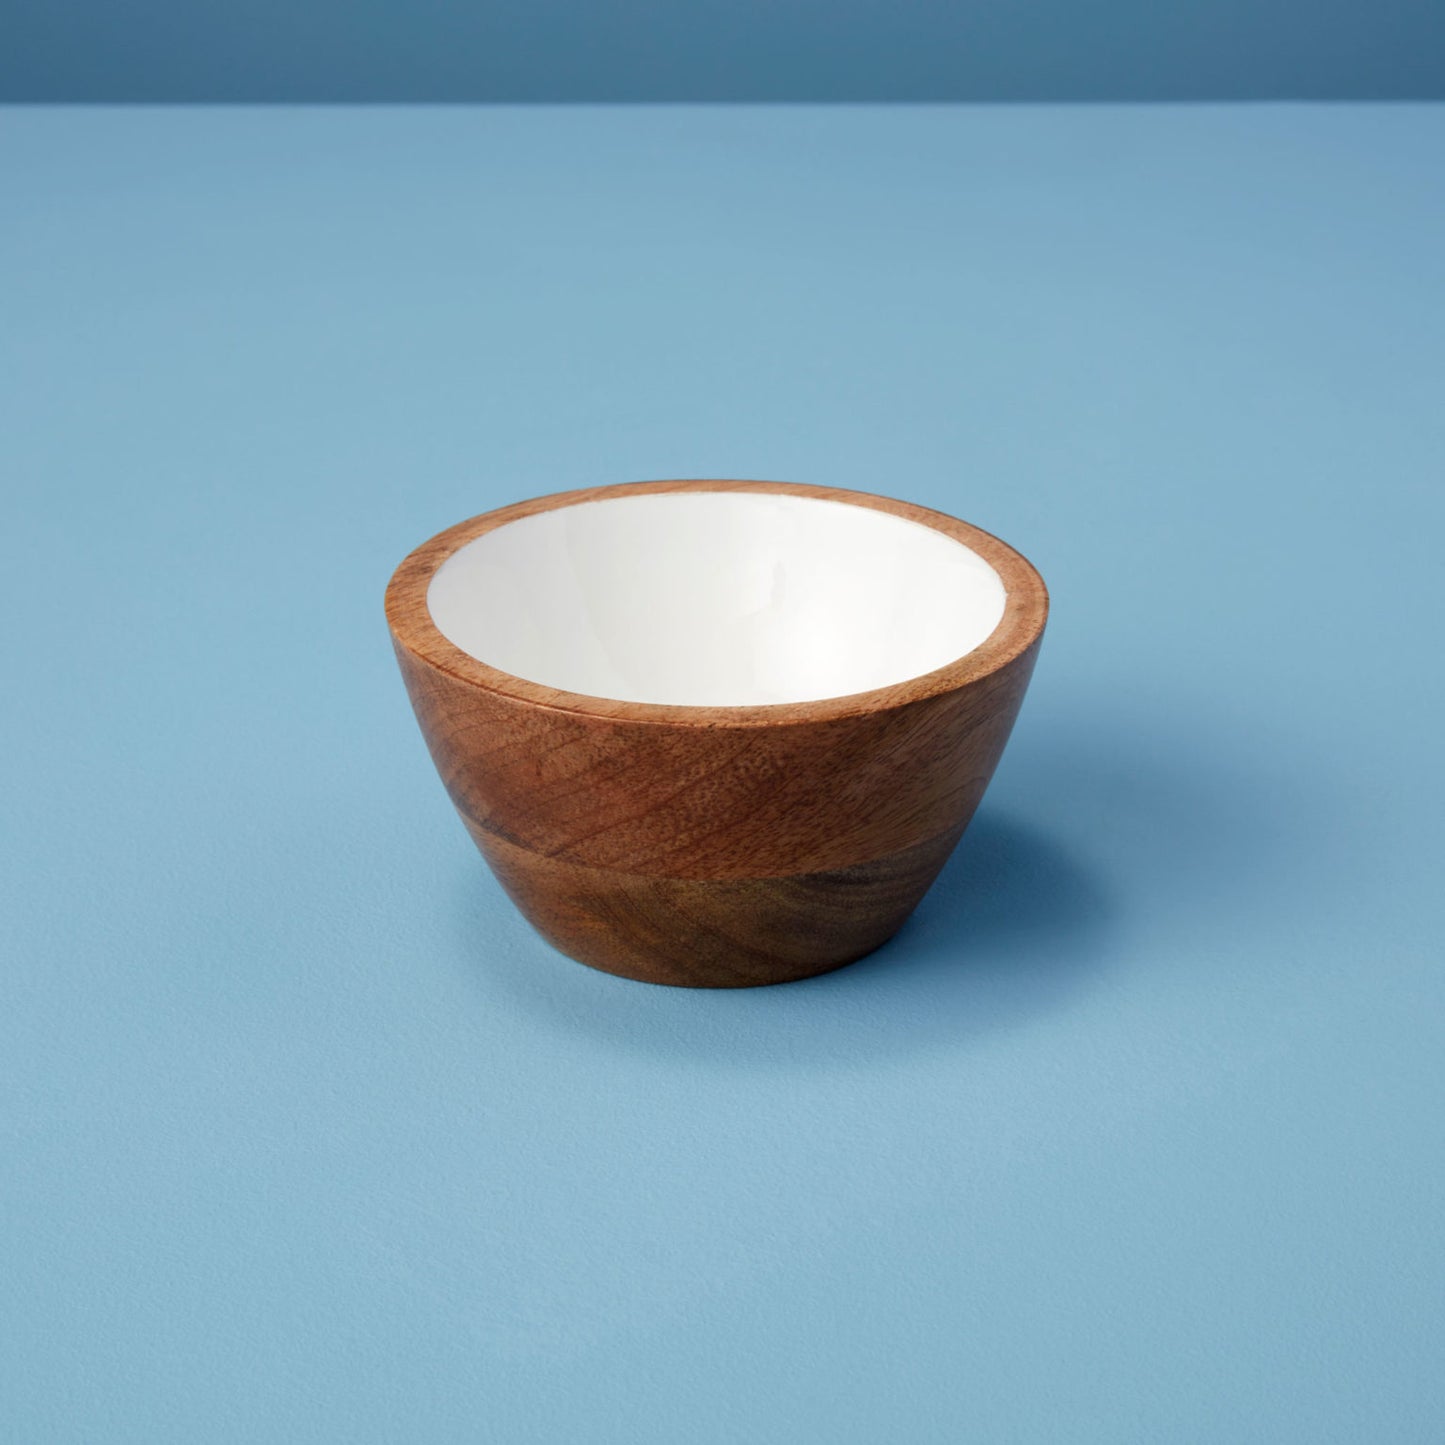 Mango Wood and White Enamel Bowl, Small